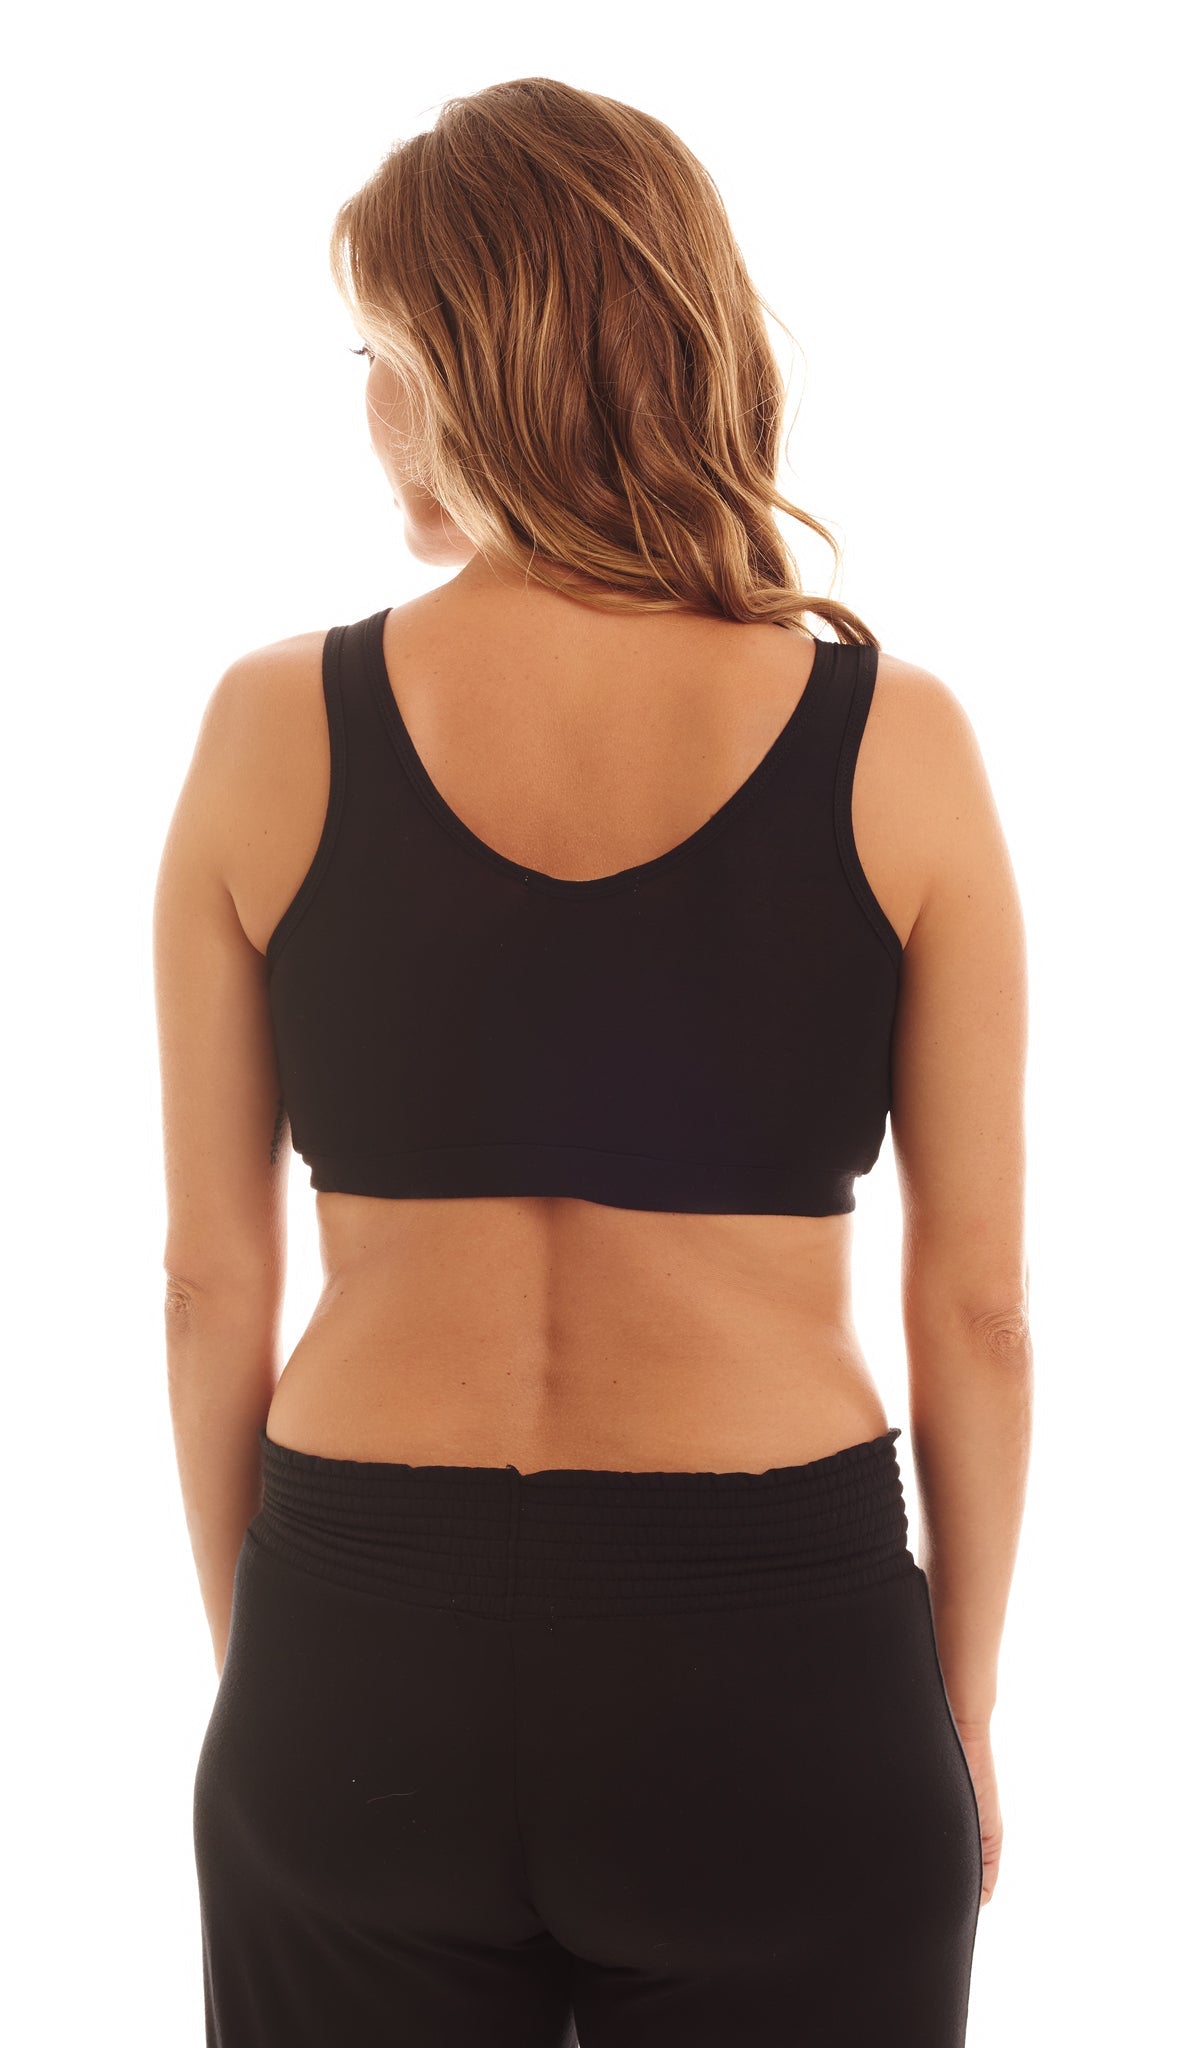 Zinnia Paisley 3-Pack. Detail back shot of woman wearing solid black nursing bra.